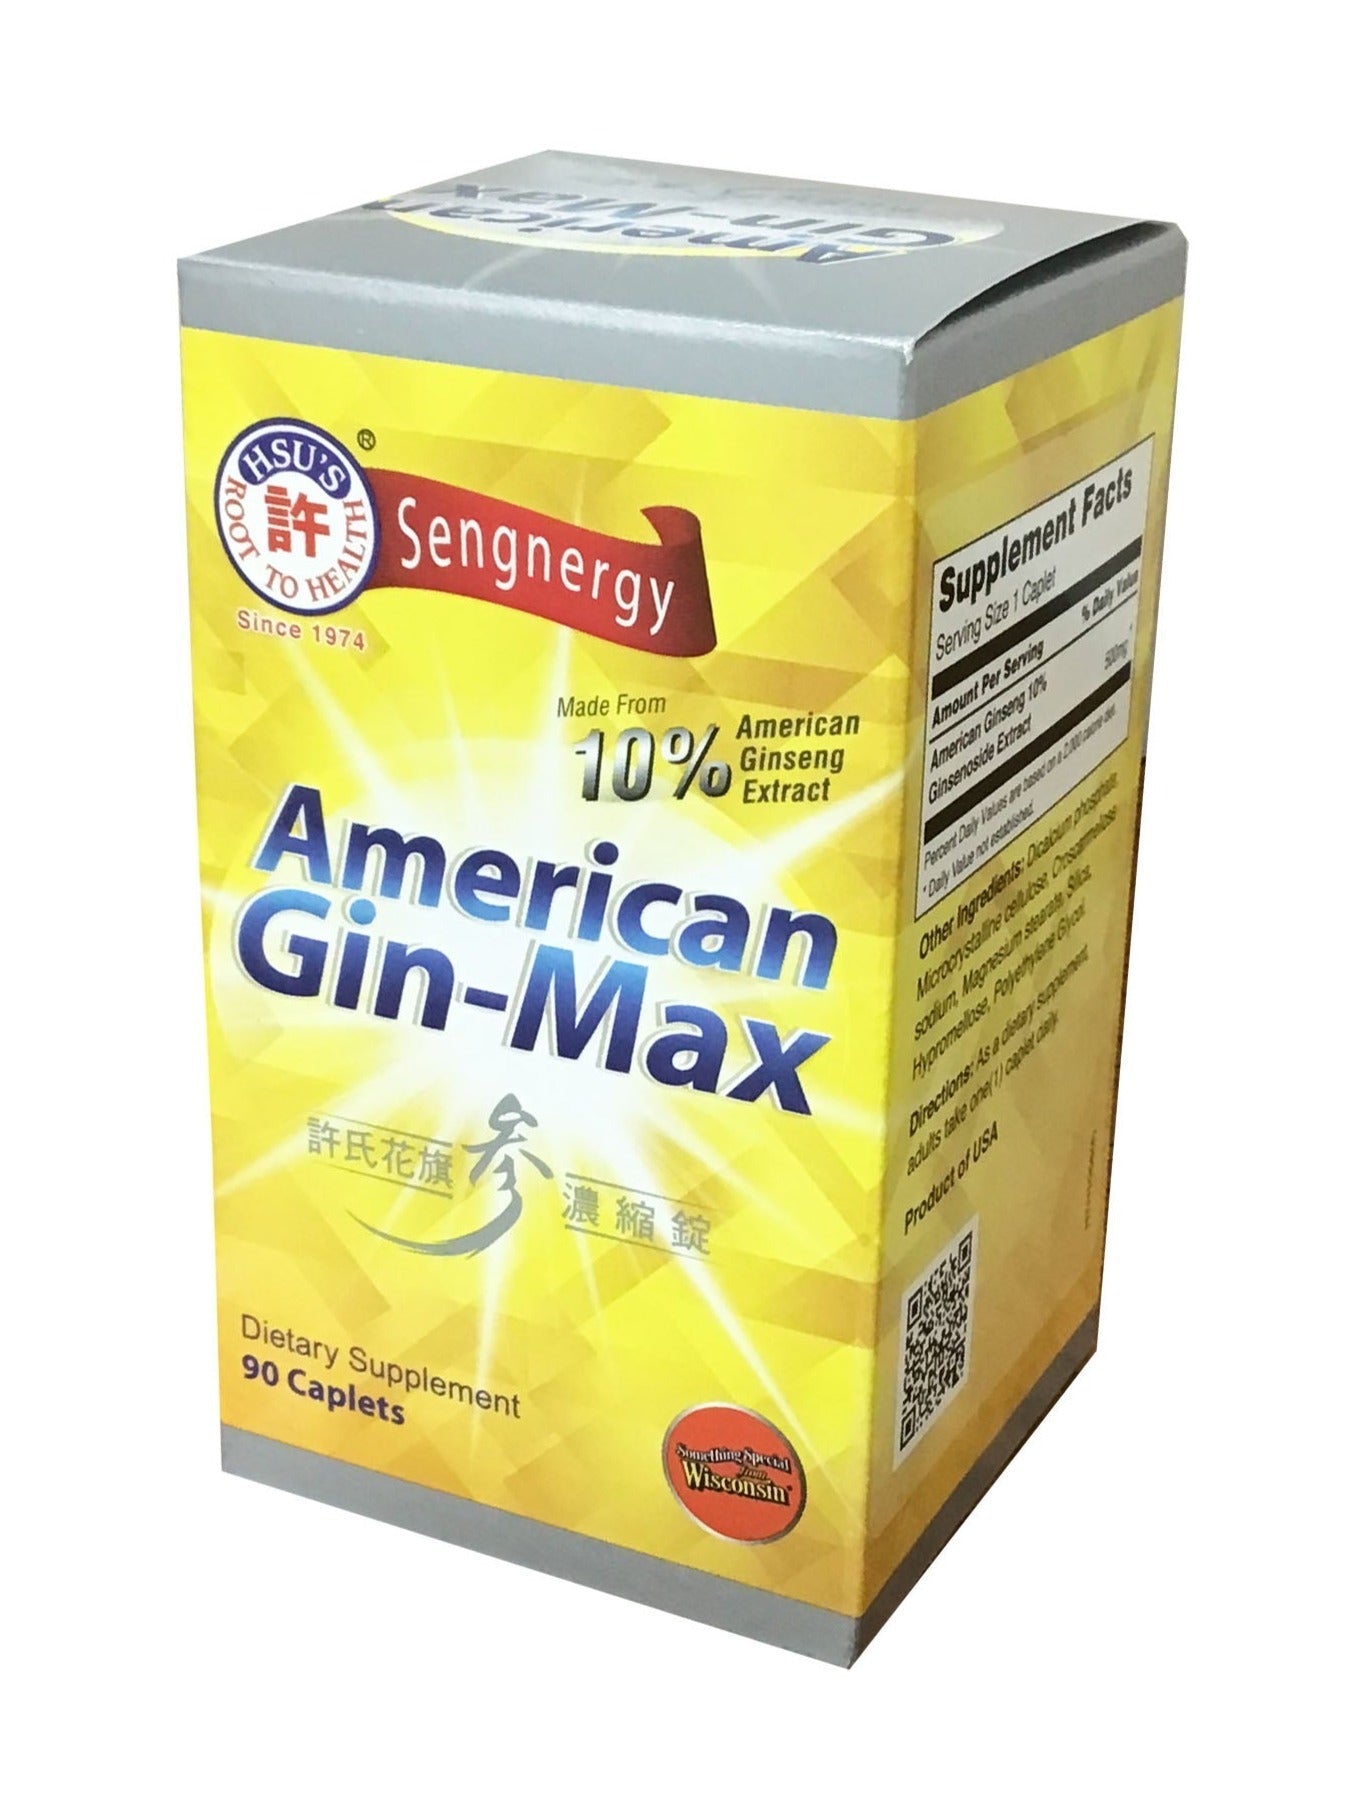 Hsu's American Gin-Max 許氏花旗參濃縮錠